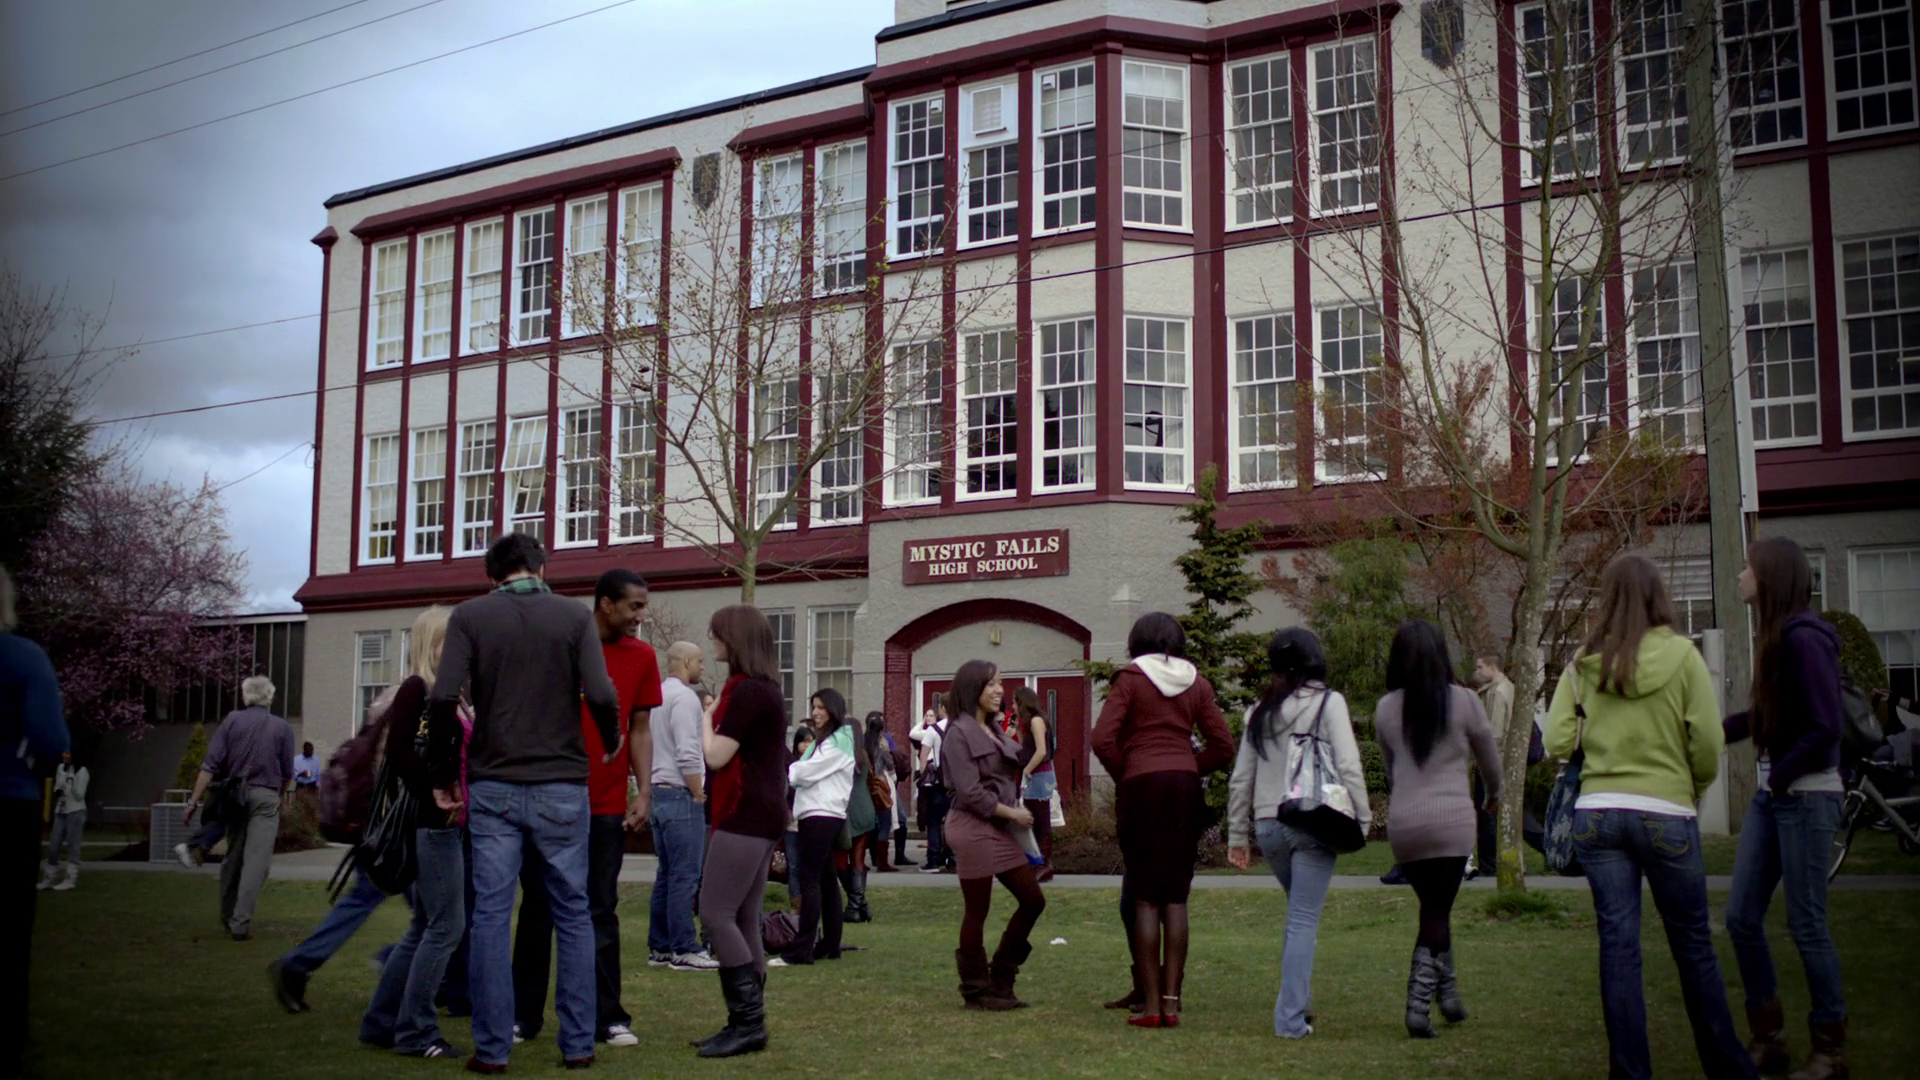 Mystic Falls High School (The Vampire Diaries)